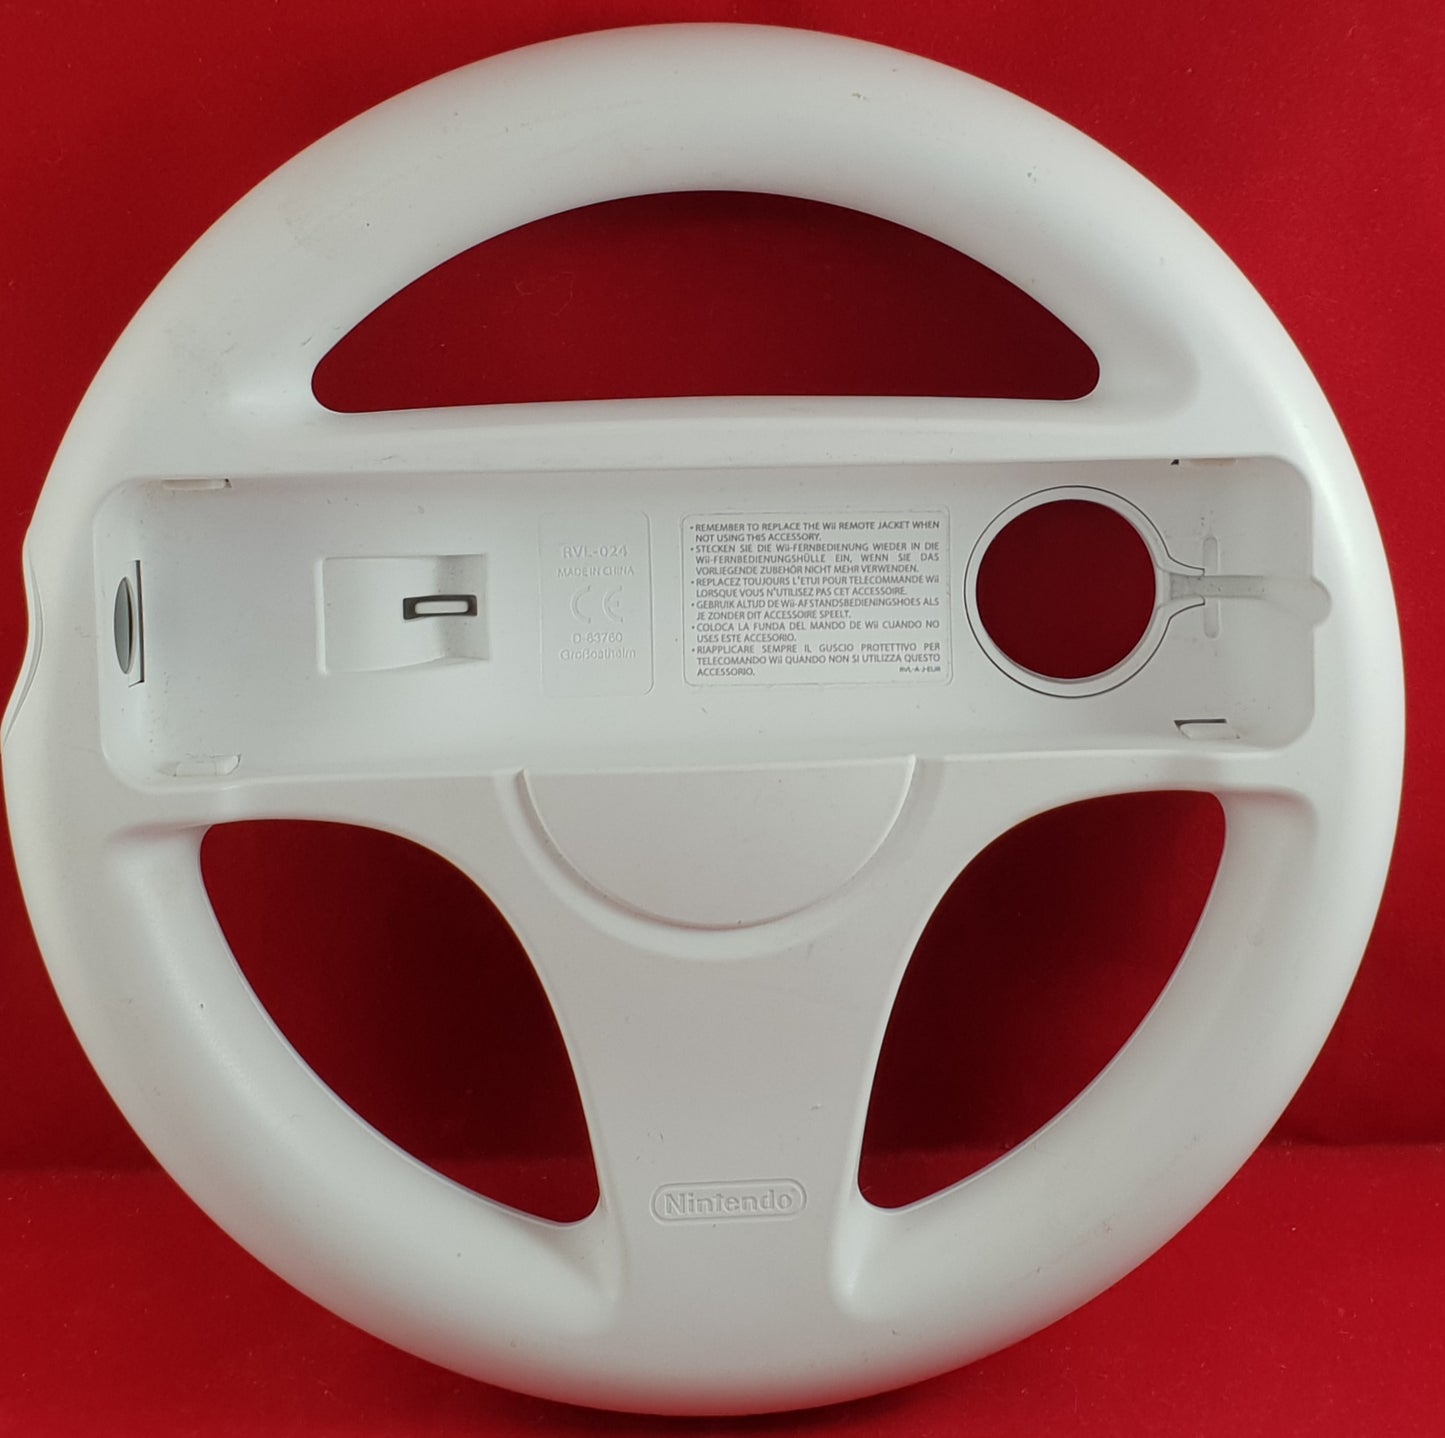 Official Nintendo Wii Racing Wheel Accessory